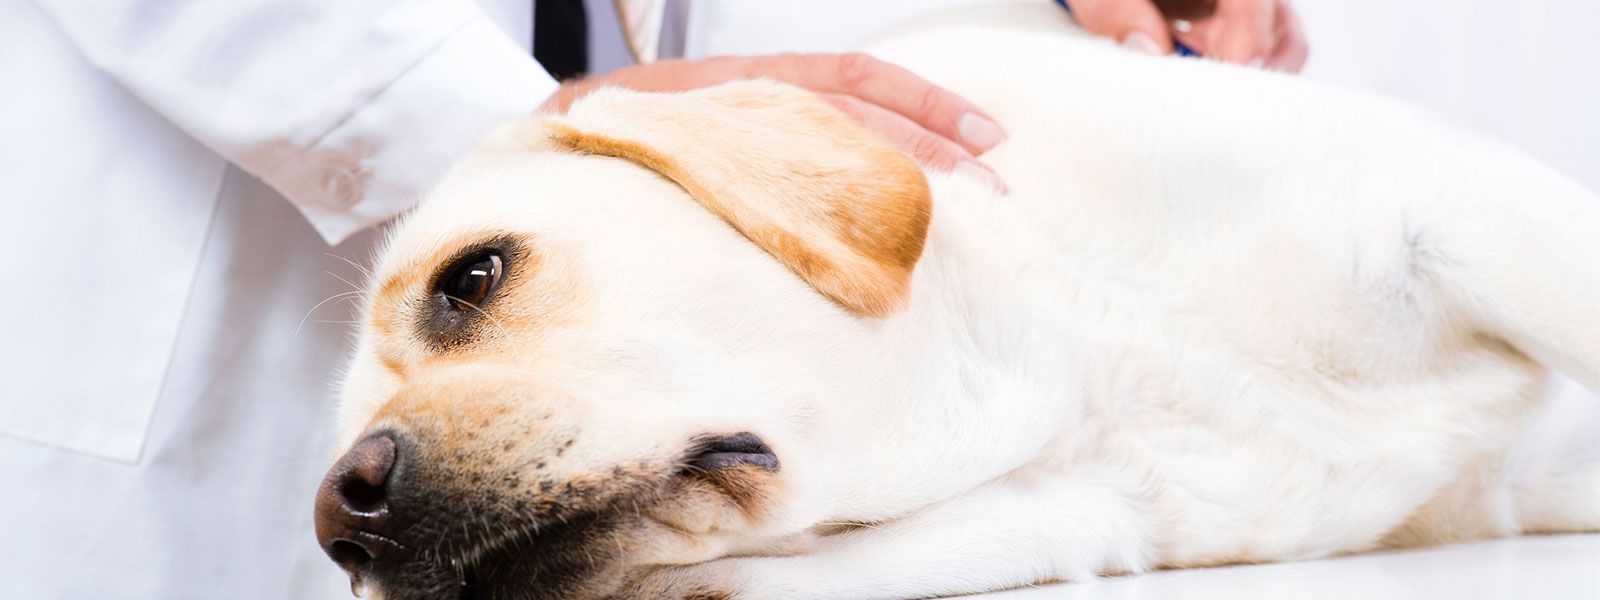 Consulta Veterinaria La Almunia - Cariñena perro en una camilla